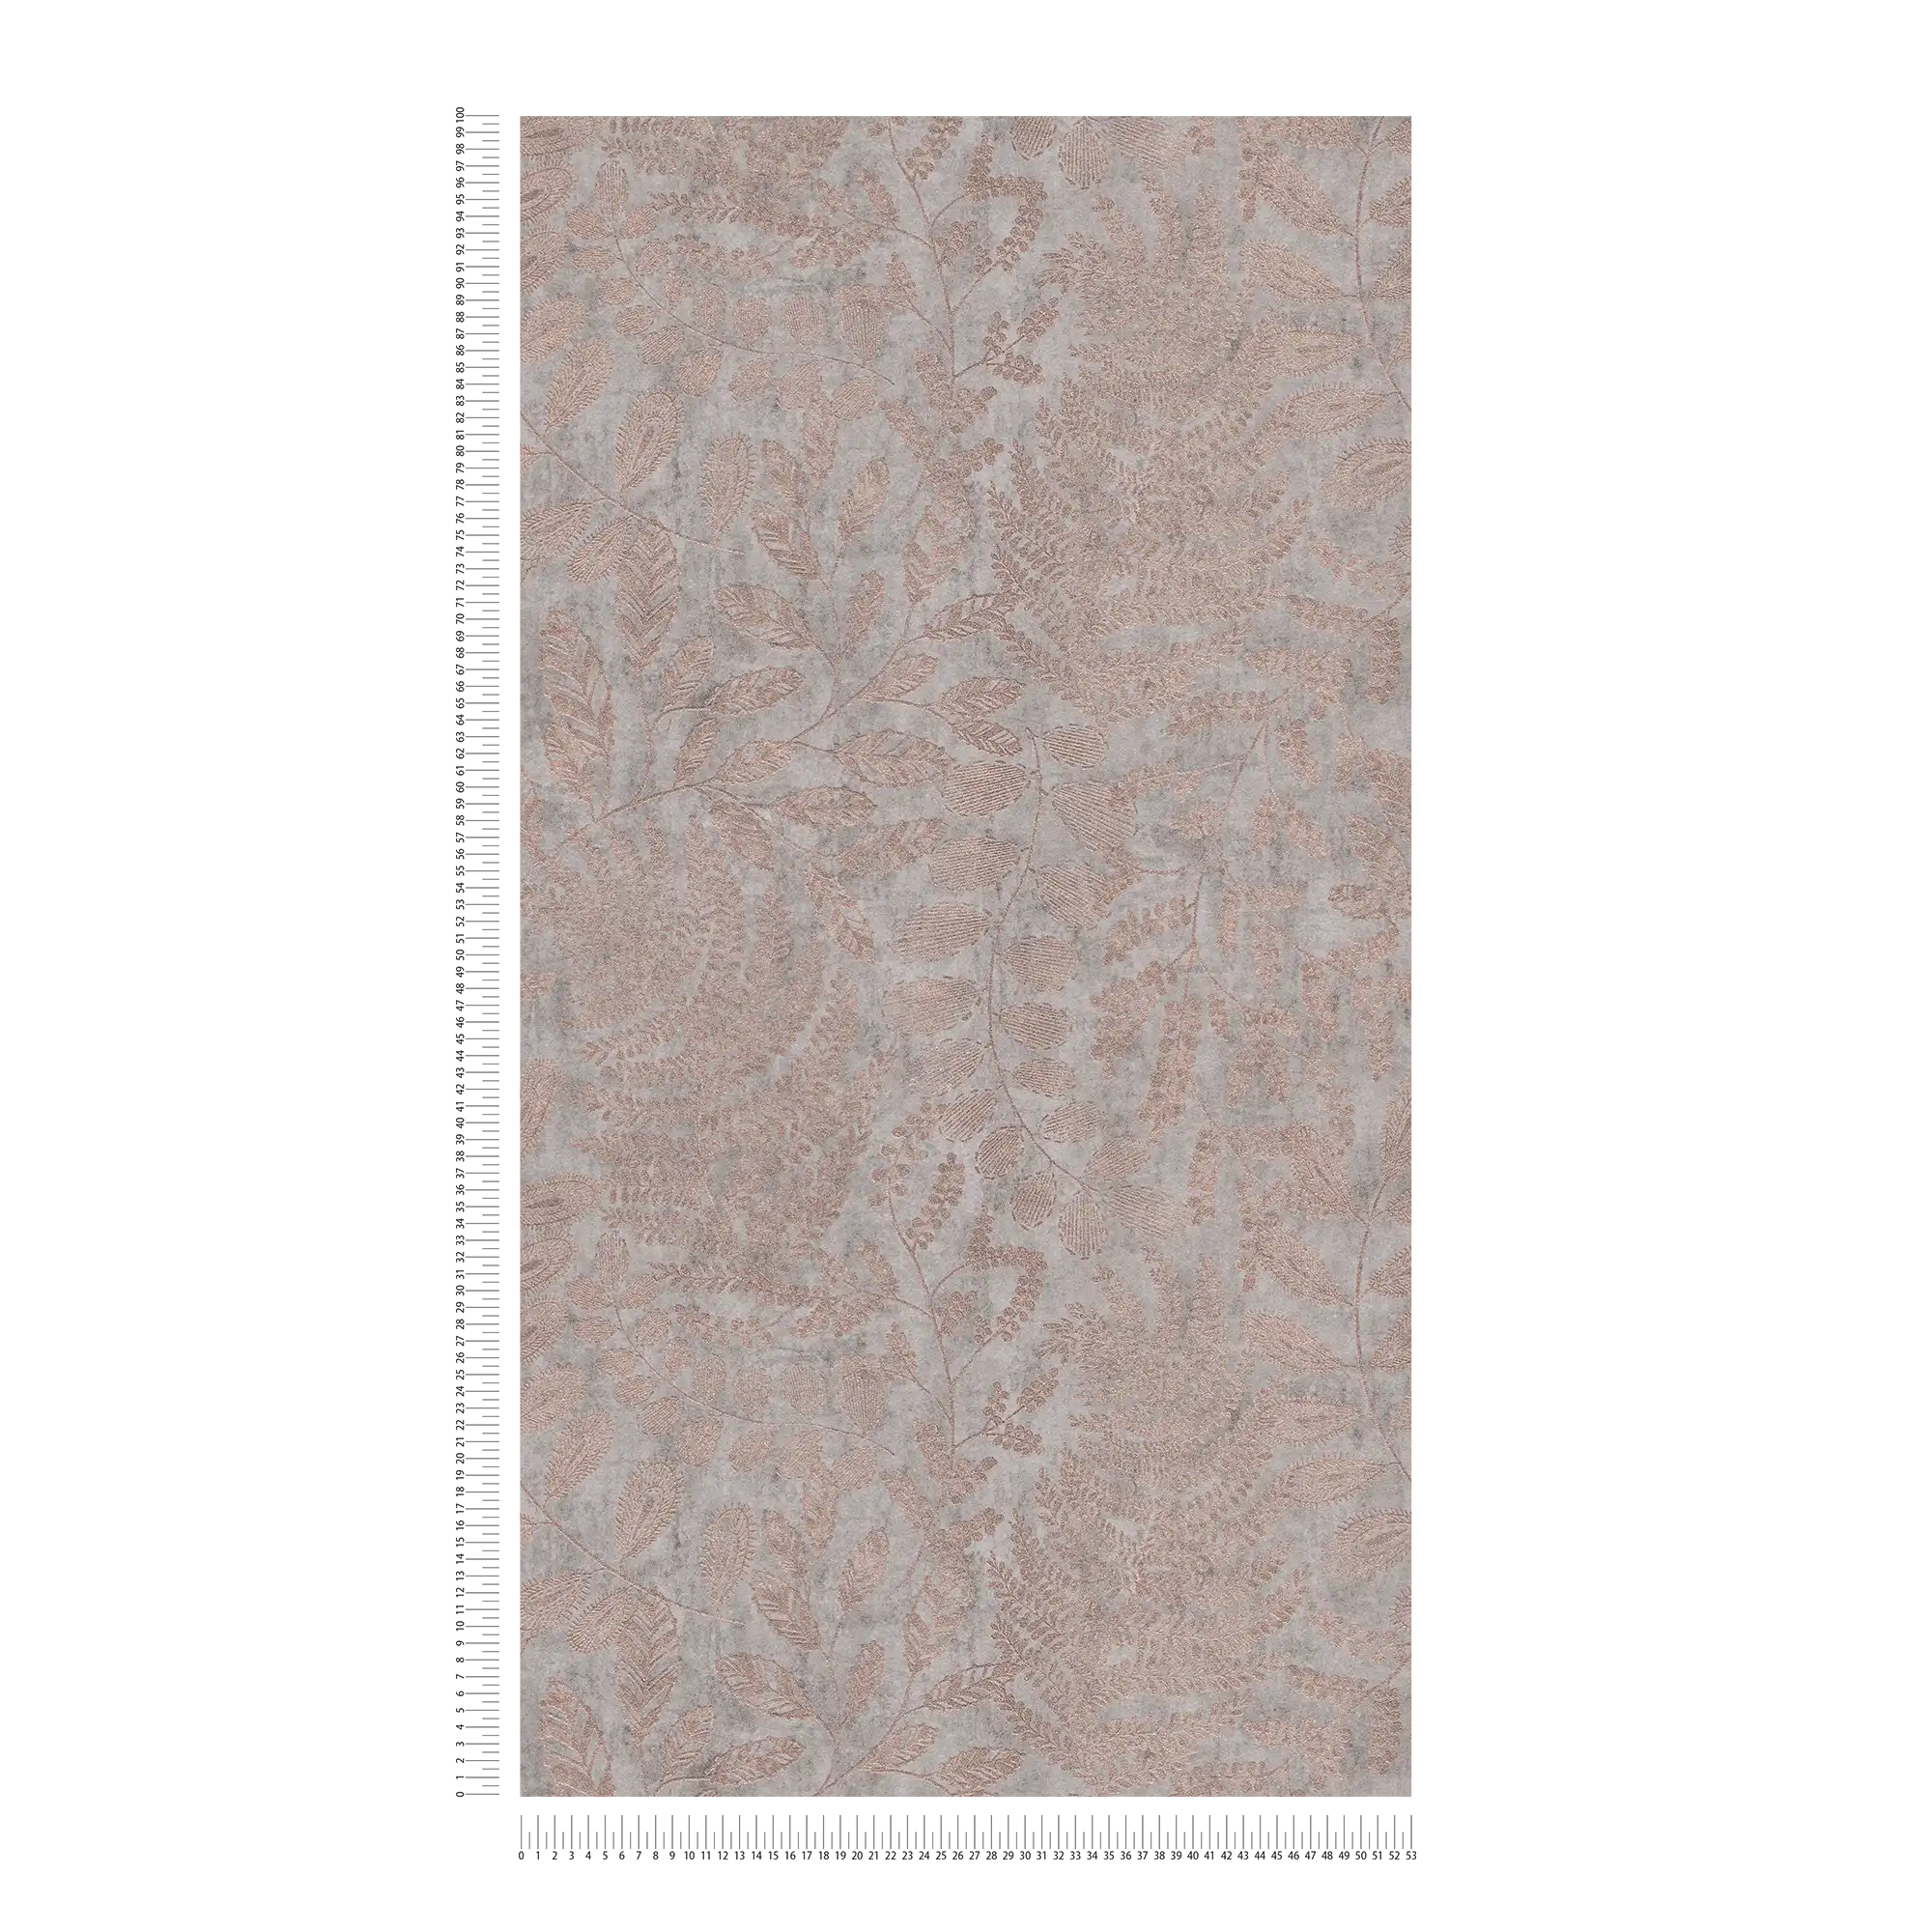             Metallic wallpaper leaf pattern in skandi style - grey, metallic
        